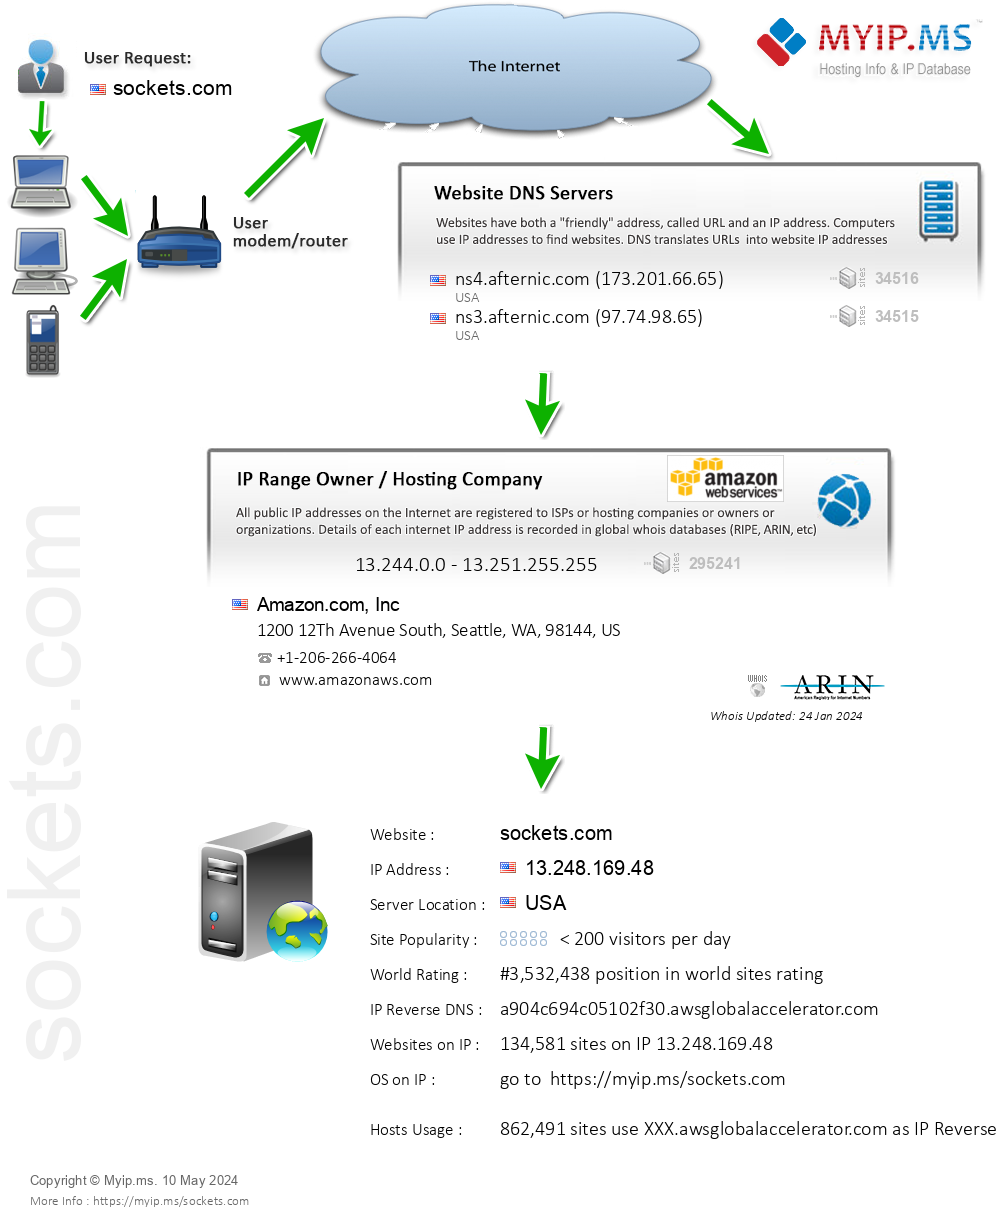 Sockets.com - Website Hosting Visual IP Diagram